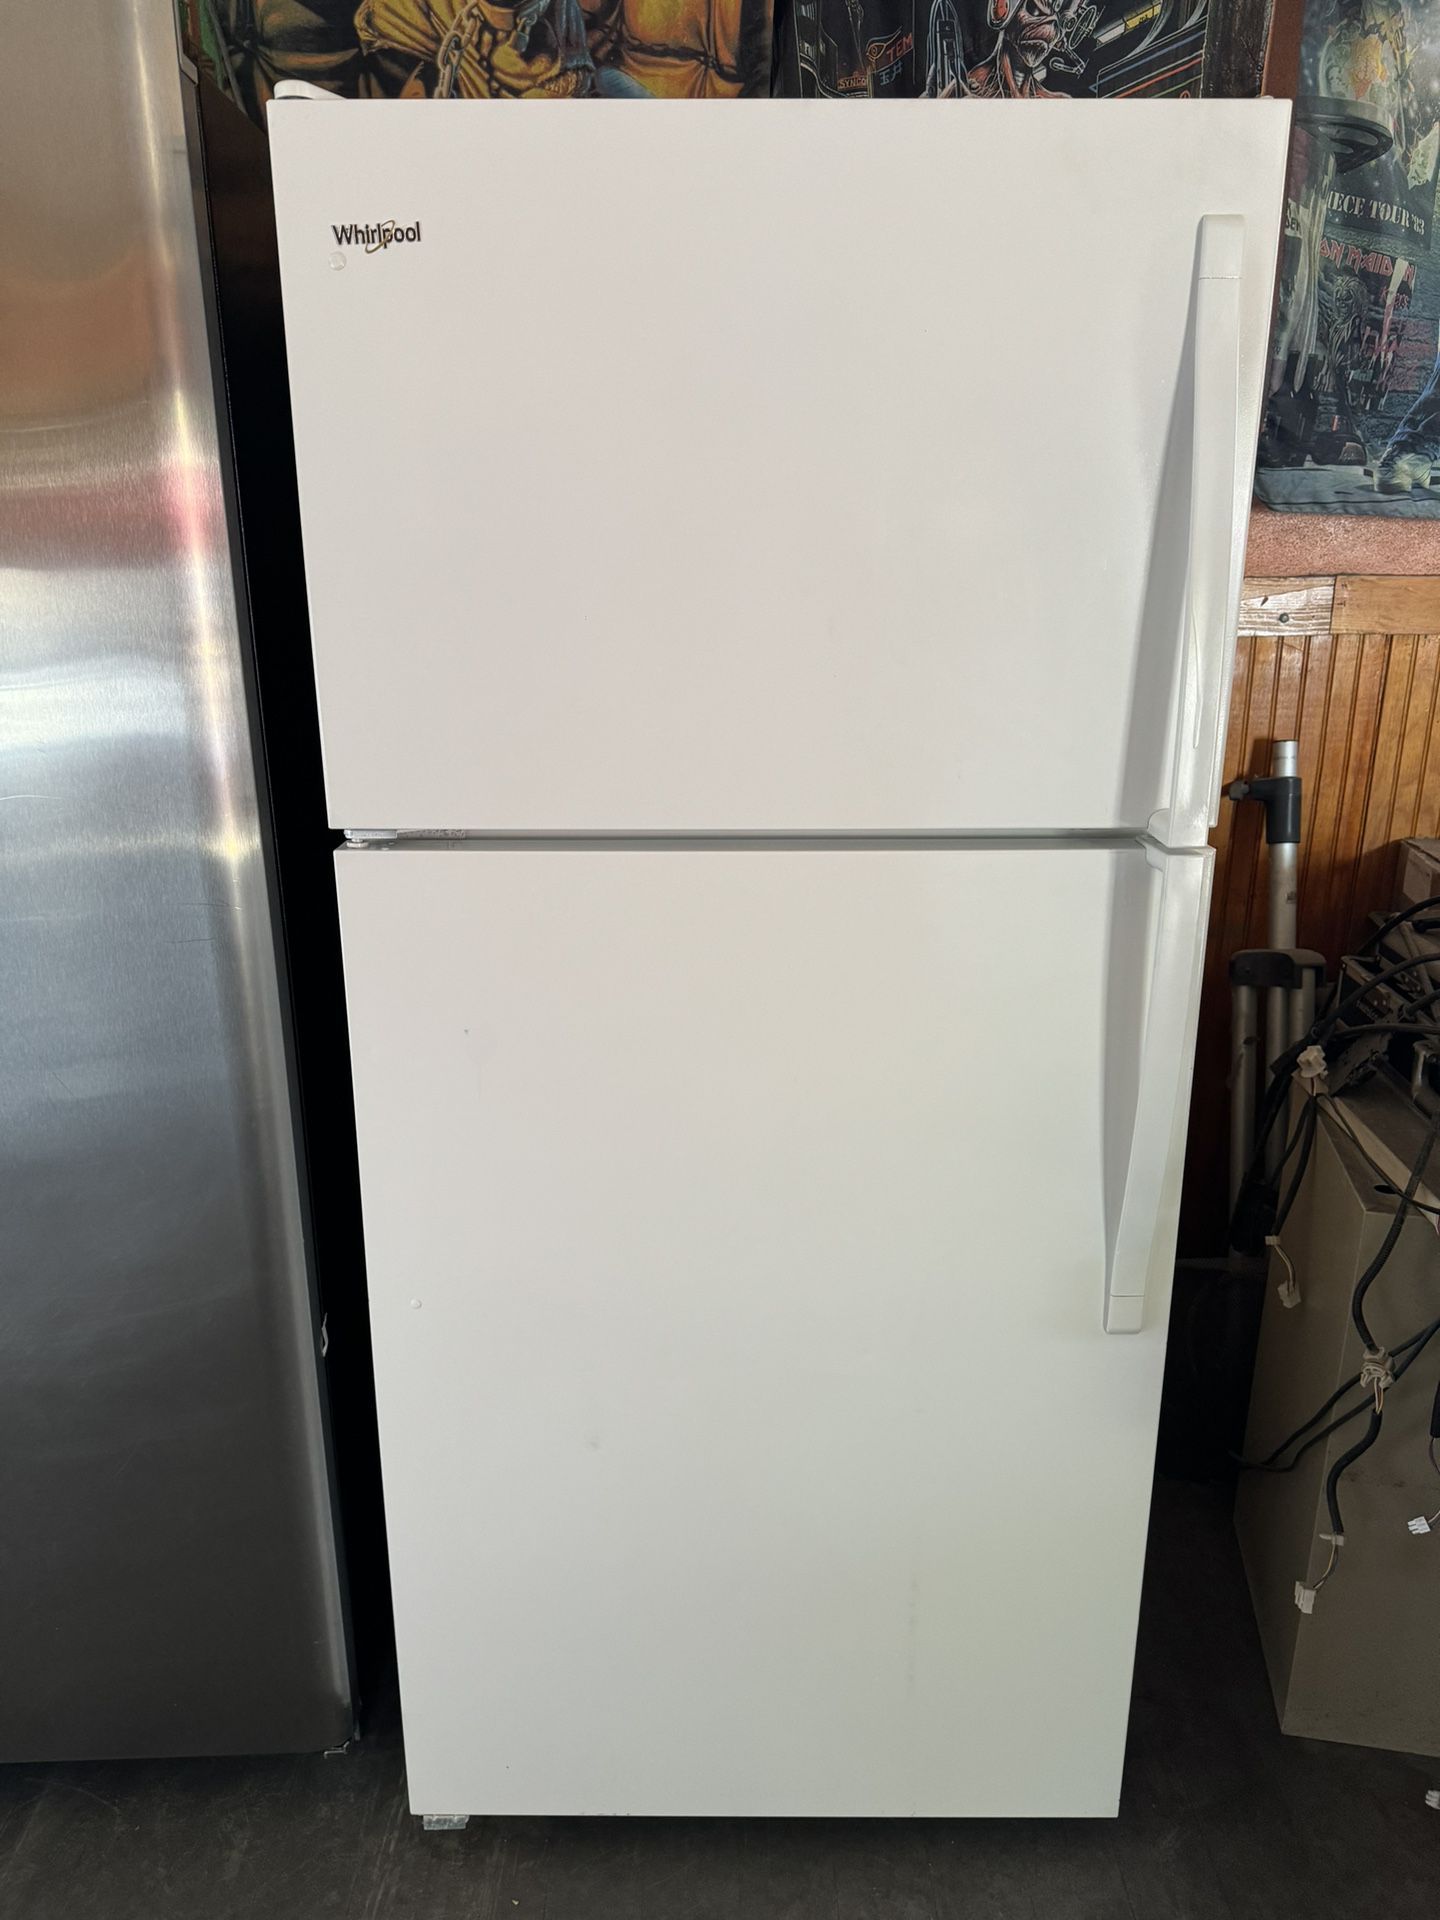 Refrigerator 3 Meses De Garantía 